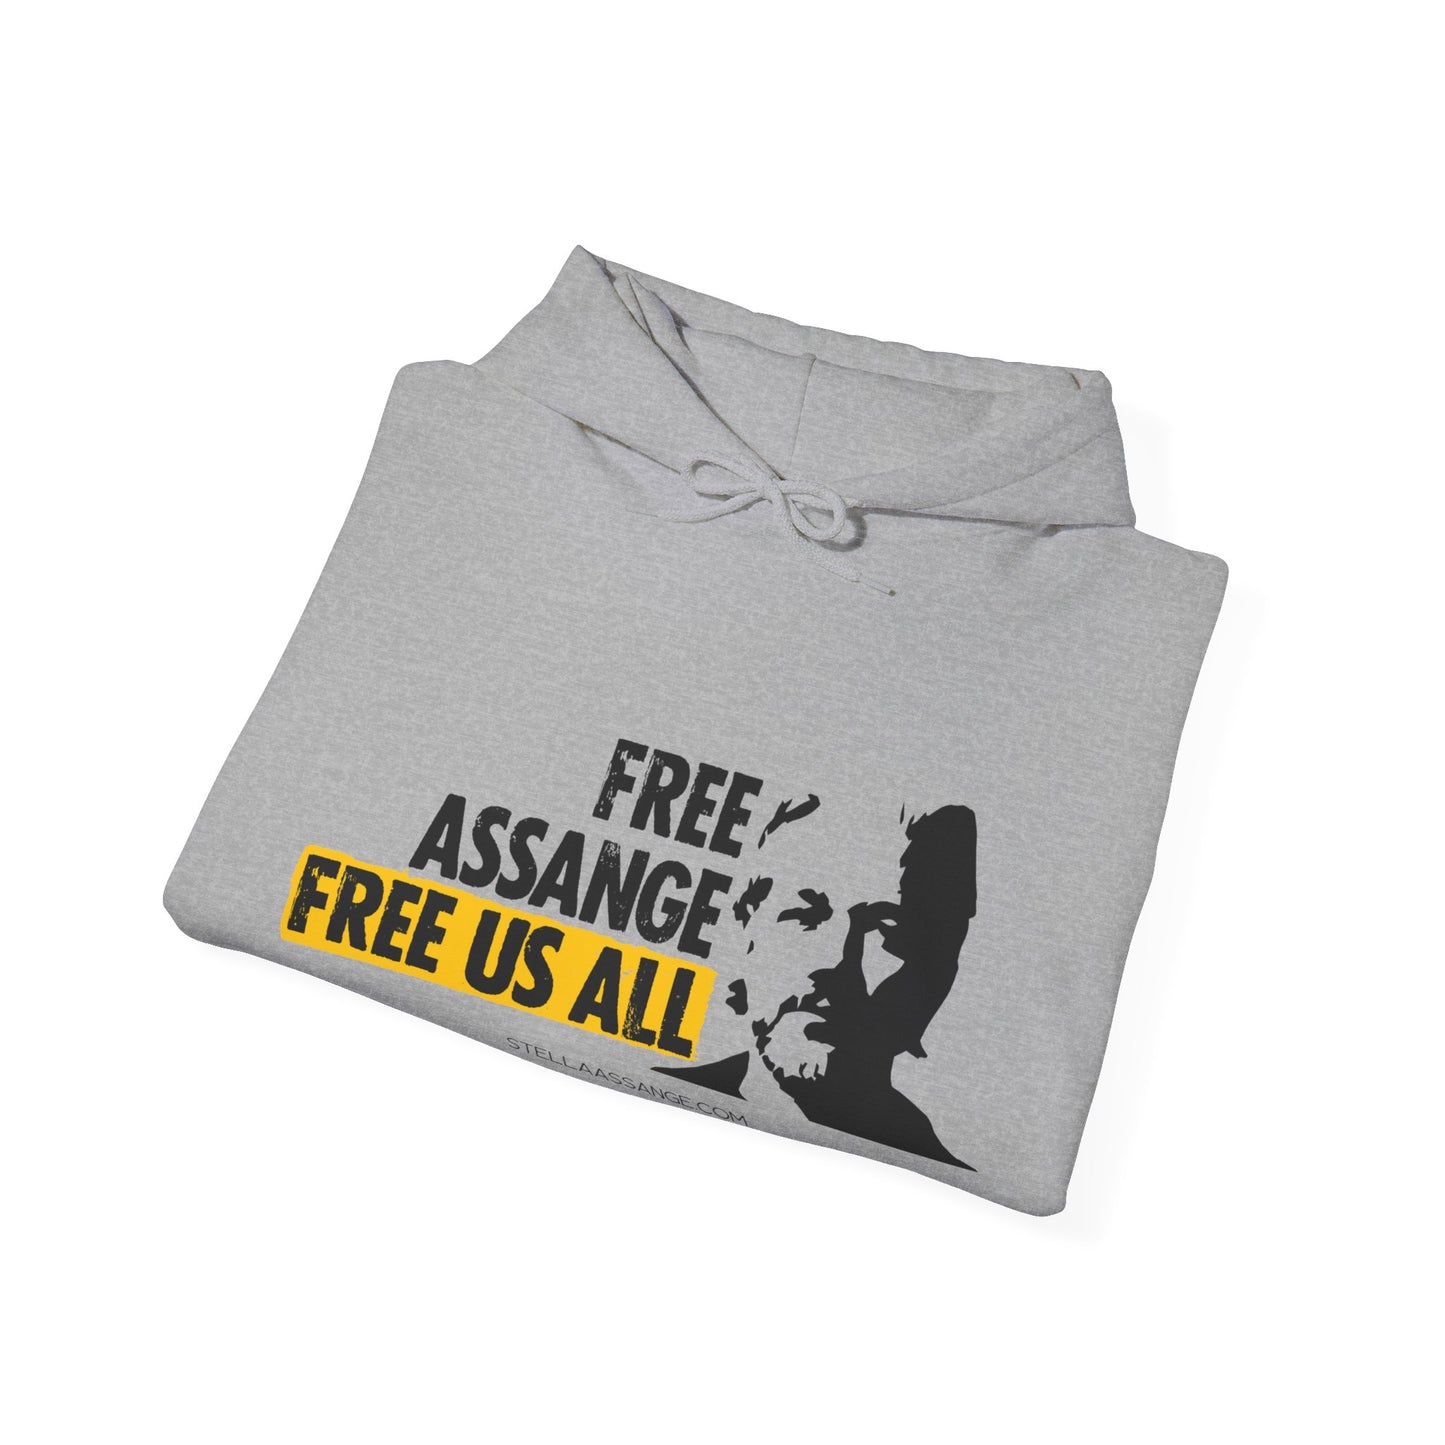 "Free Assange, Free Us All" Unisex Heavy Blend™ Hooded Sweatshirt